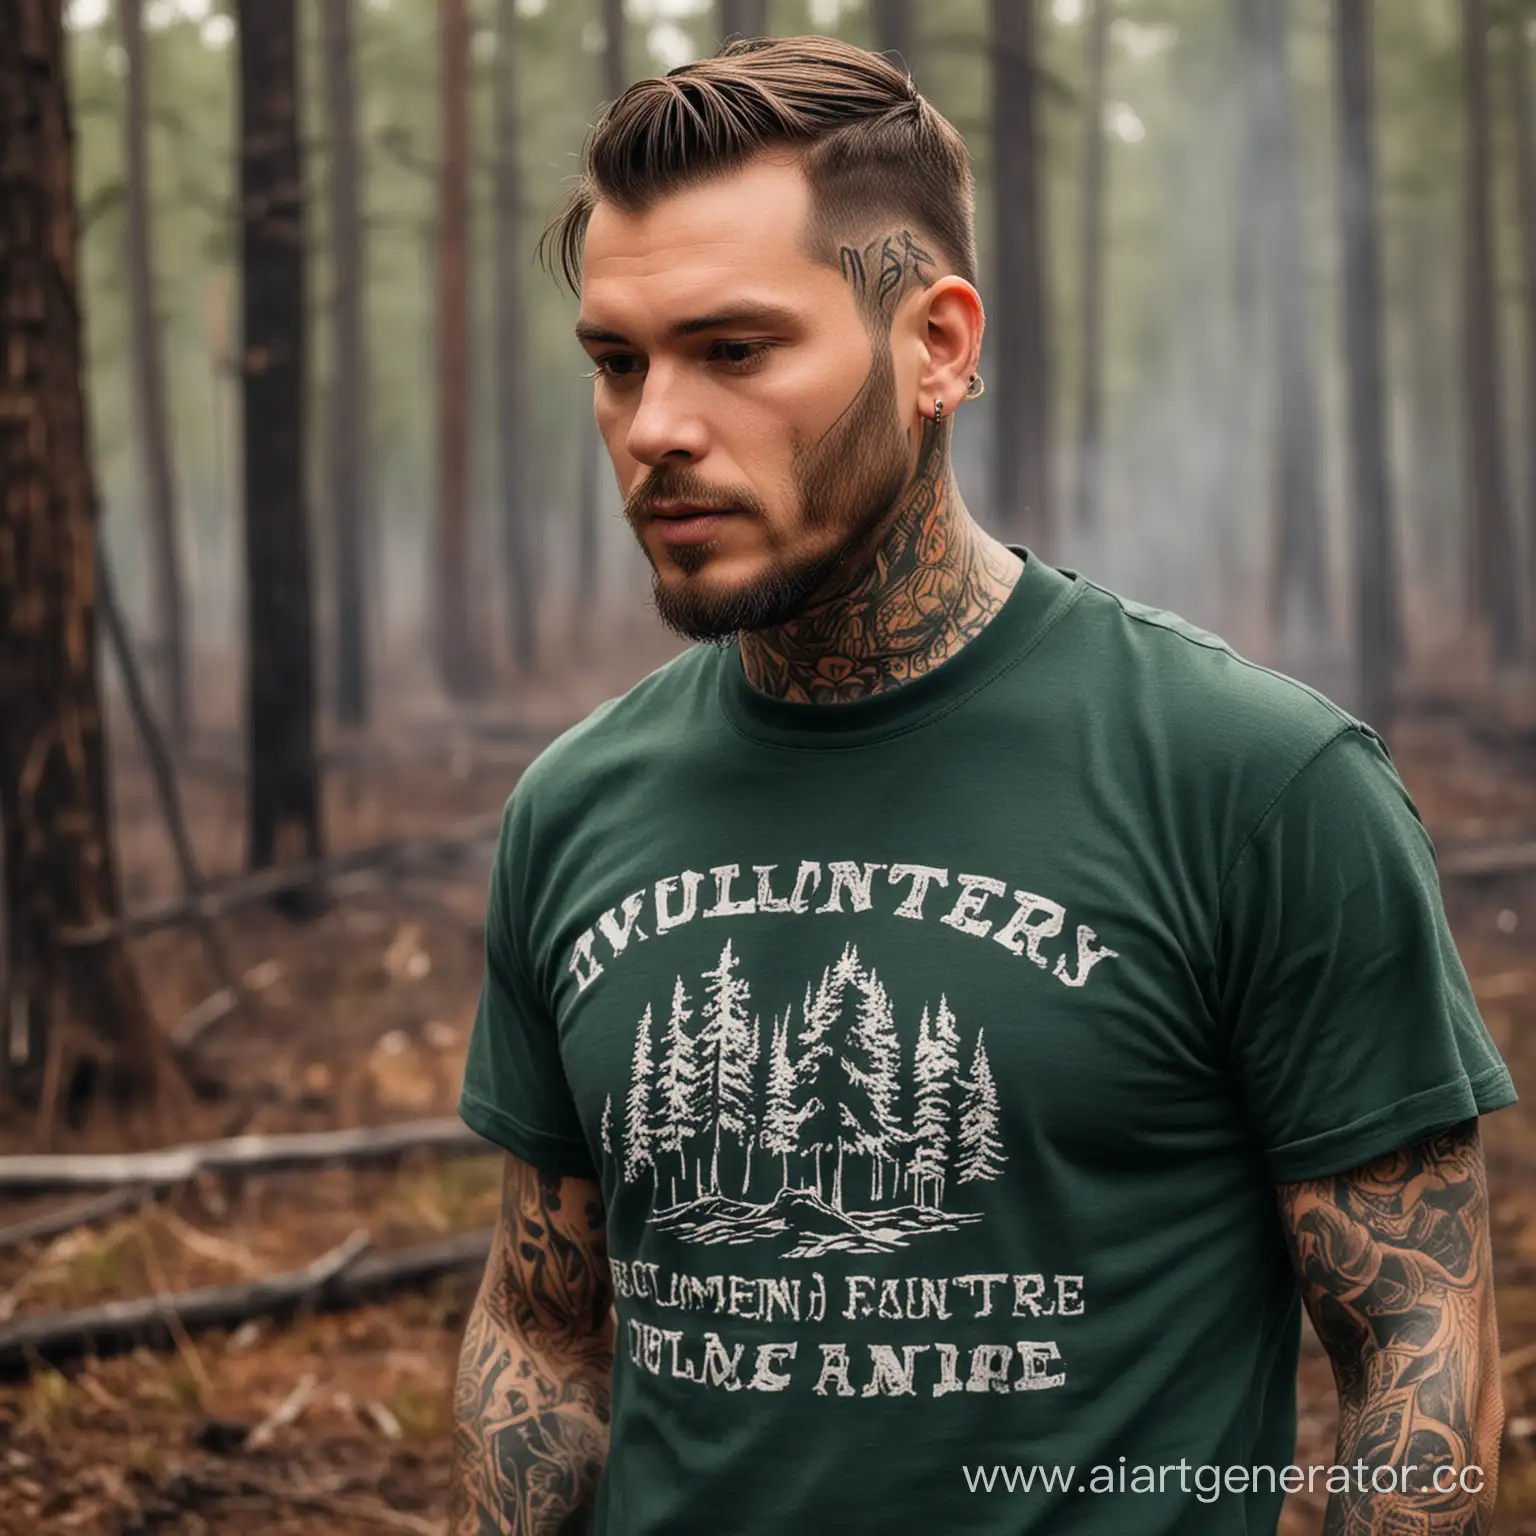 Tattooed-Singer-Extinguishing-Forest-Fire-in-Volunteer-TShirt